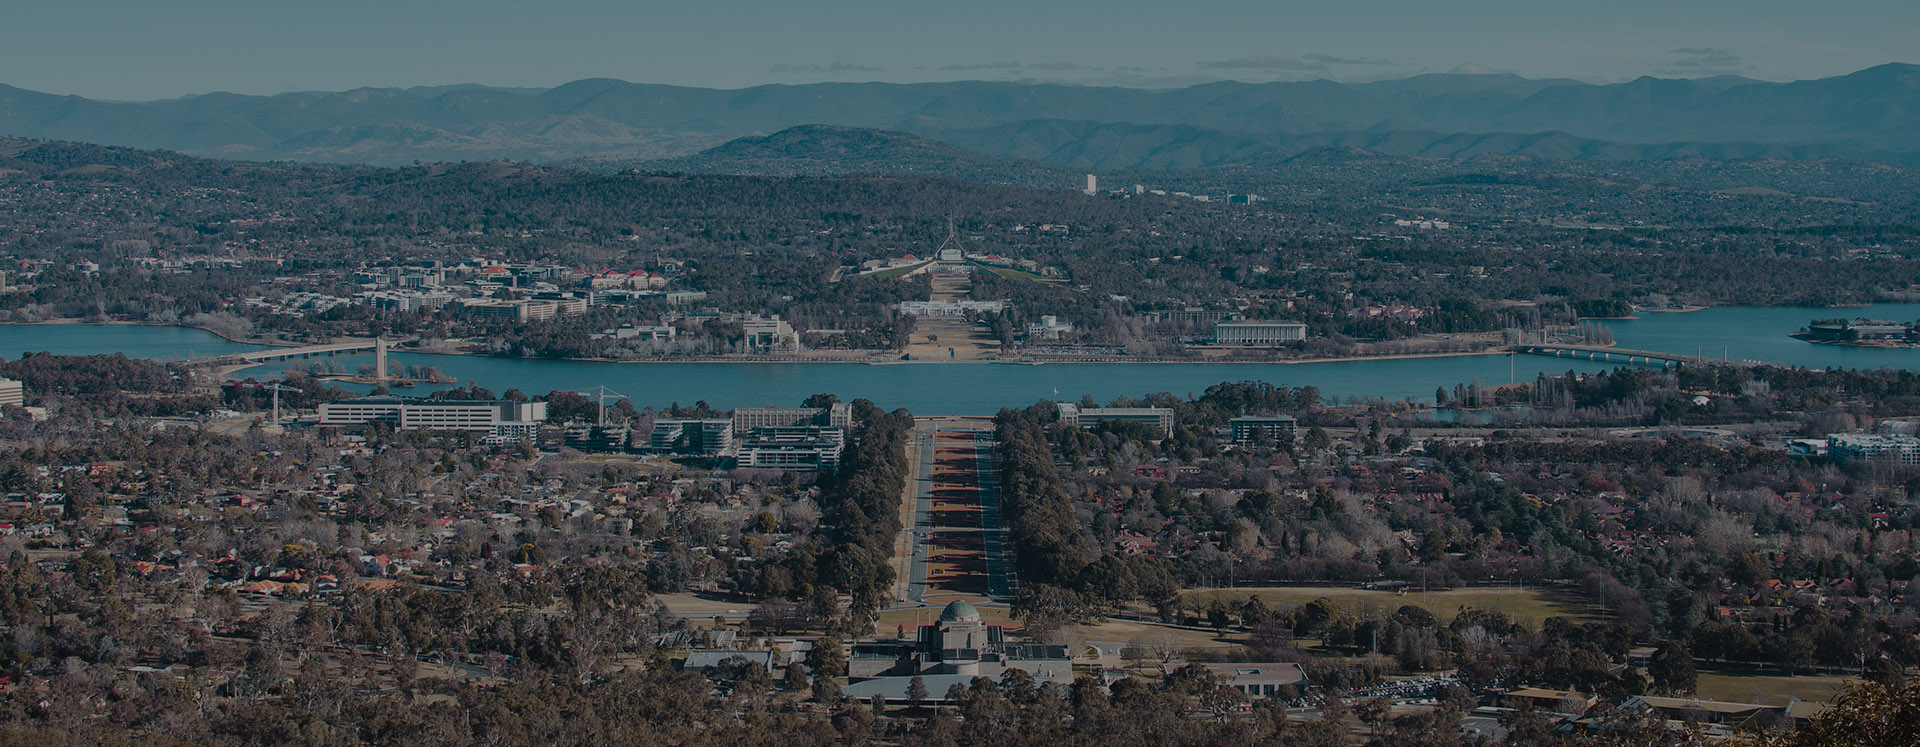 vivir en Canberra la capital australiana